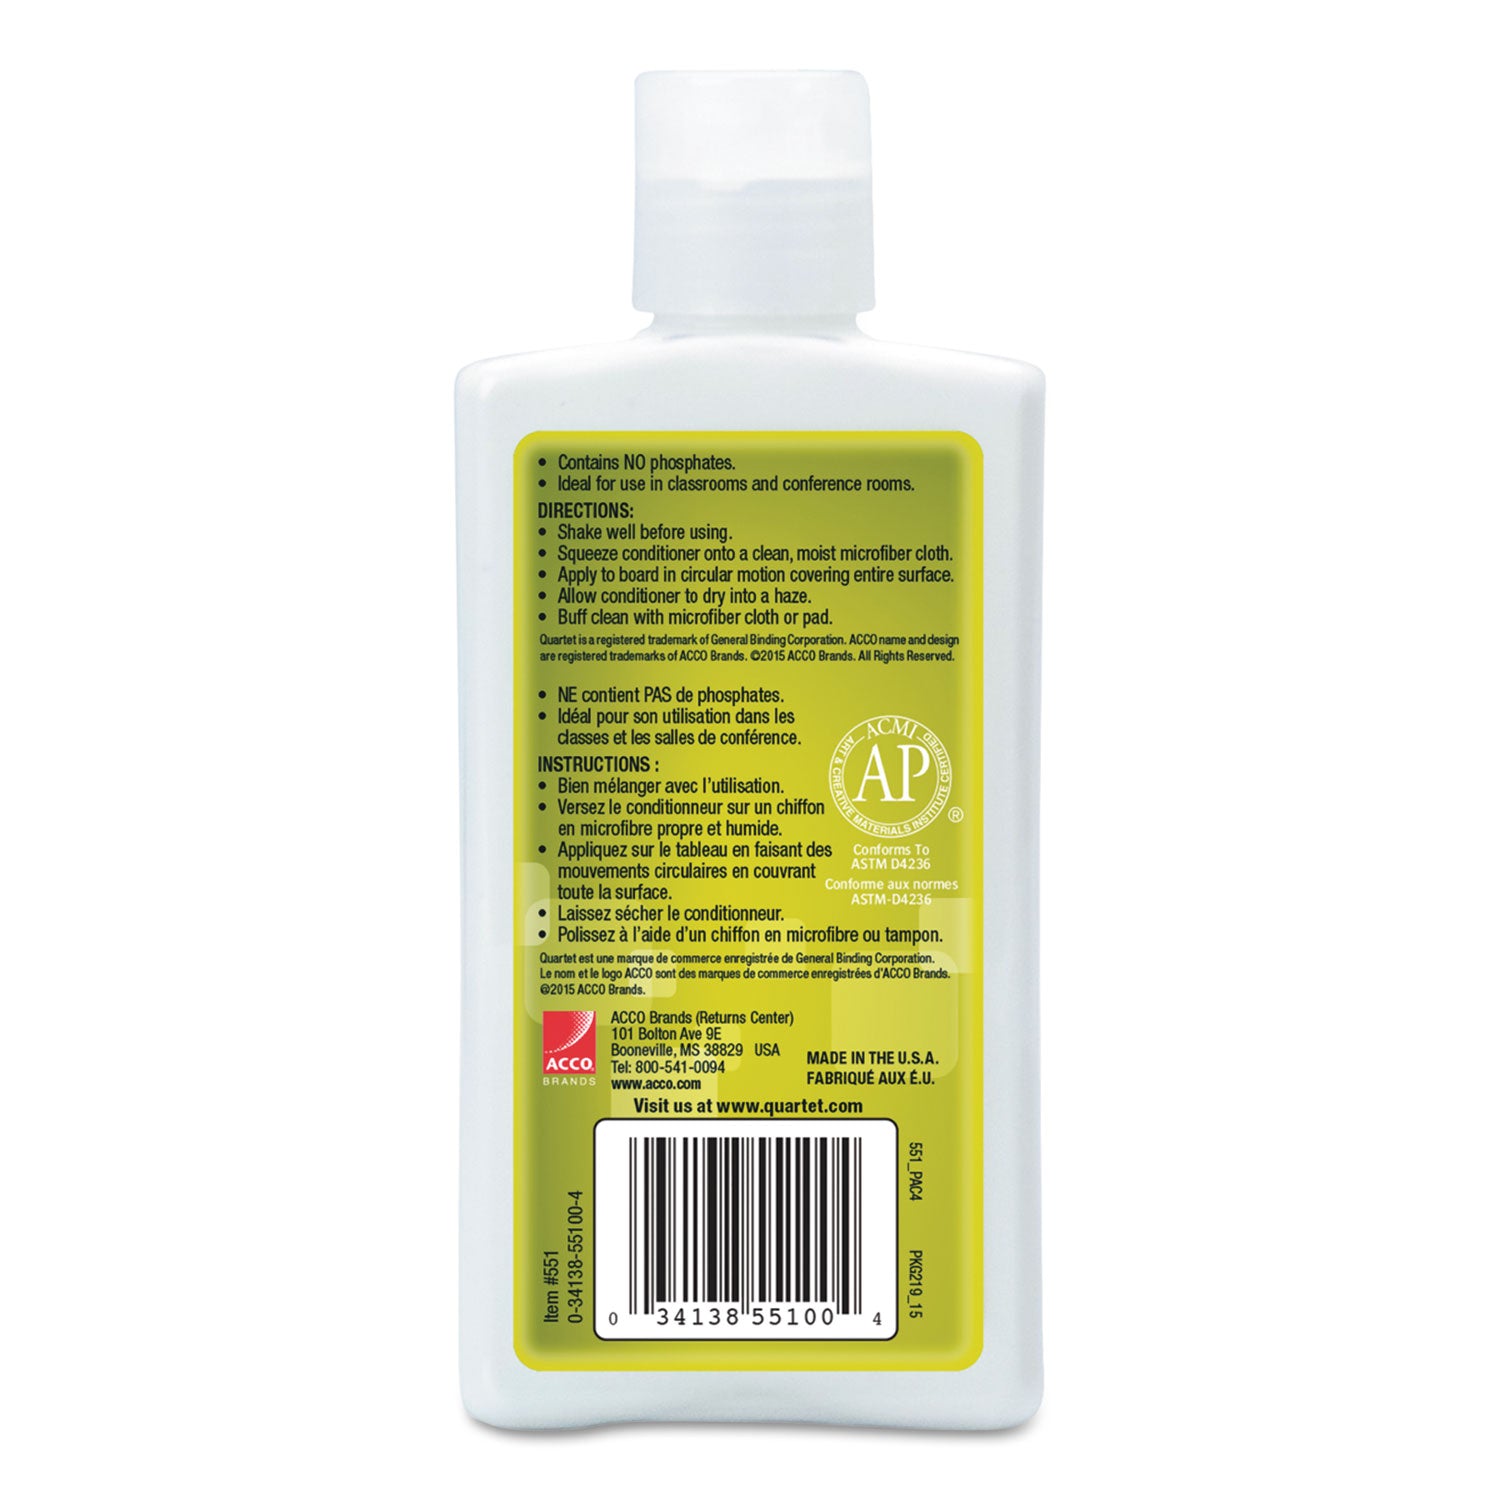 Whiteboard Conditioner/Cleaner for Dry Erase Boards, 8 oz Bottle - 